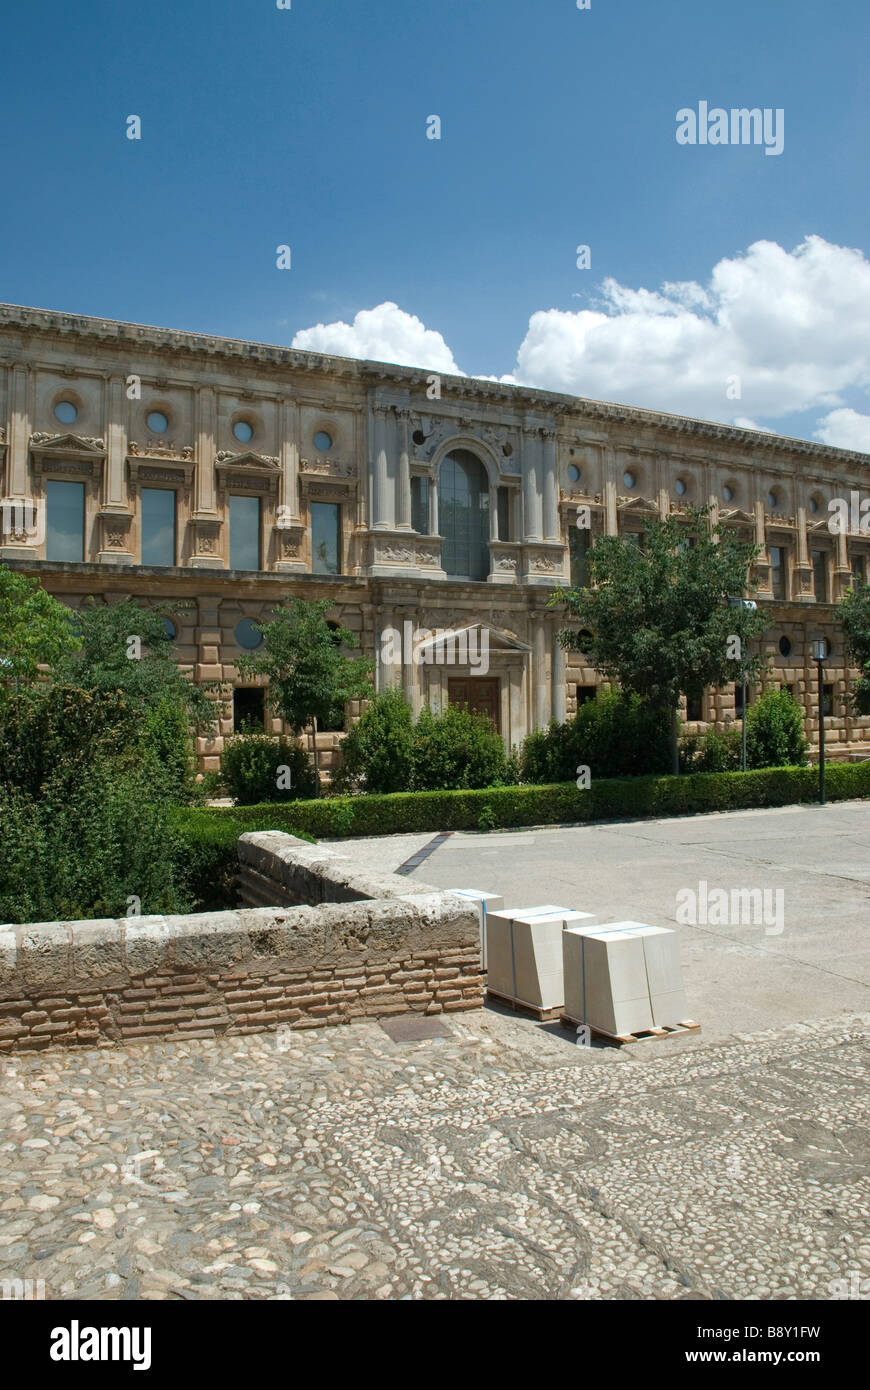 Fassade des Palastes, Palast von Charles V, Alhambra, Granada, Andalusien, Spanien Stockfoto